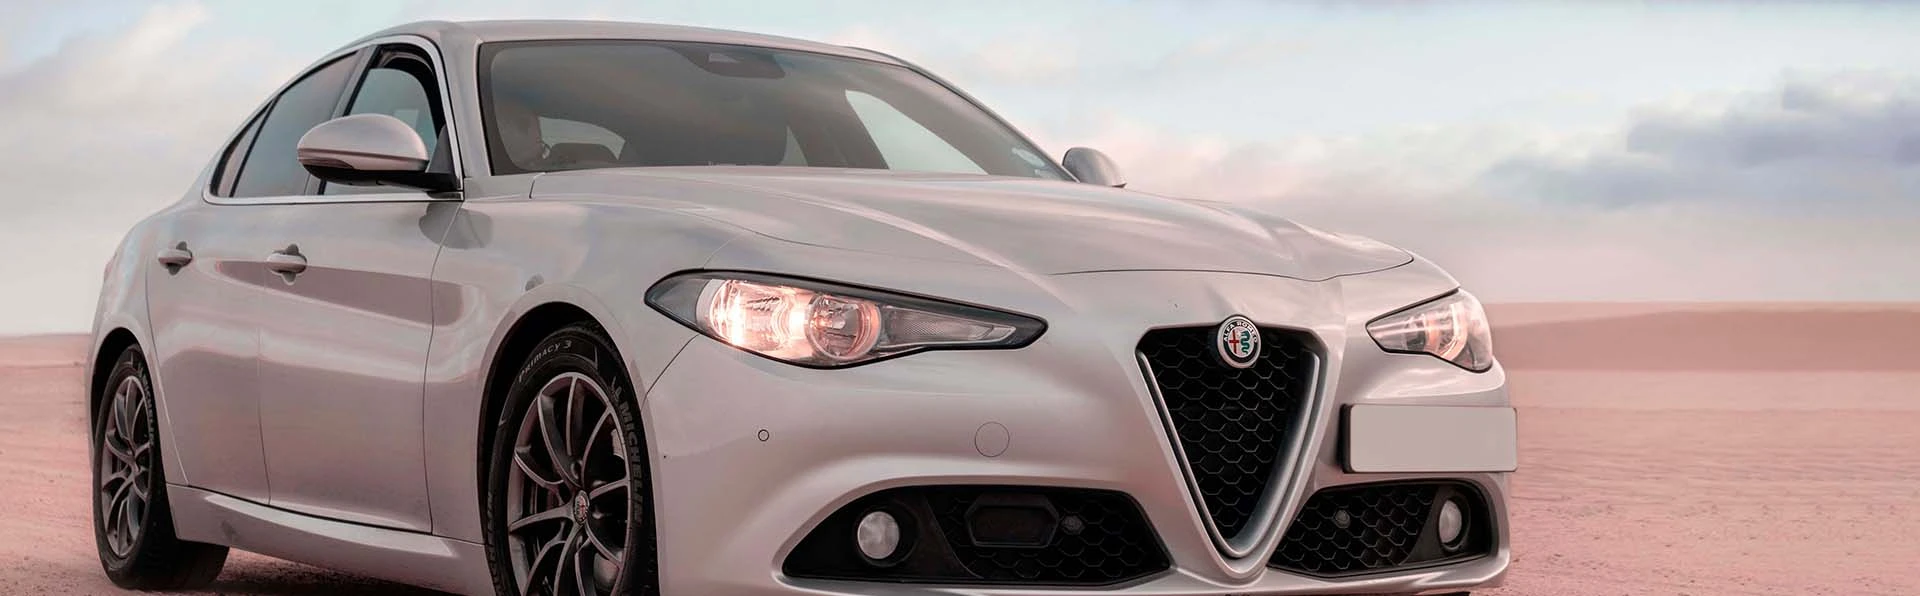 Our Alfa Romeo Giulia Review